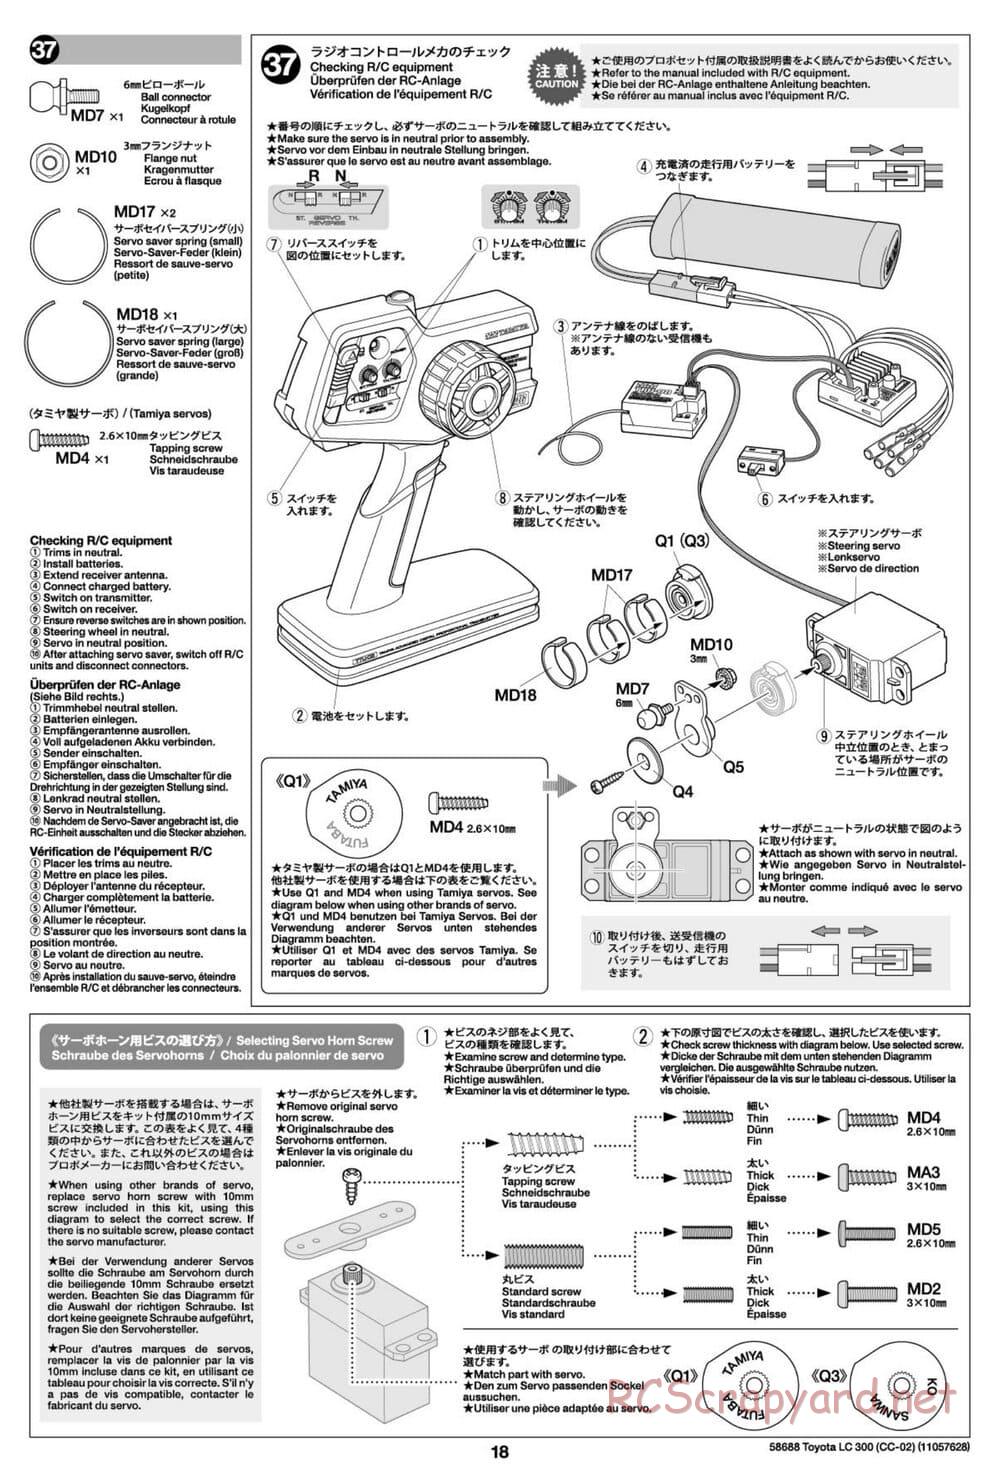 Tamiya - Toyota Land Cruiser 300 - CC-02 Chassis - Manual - Page 18